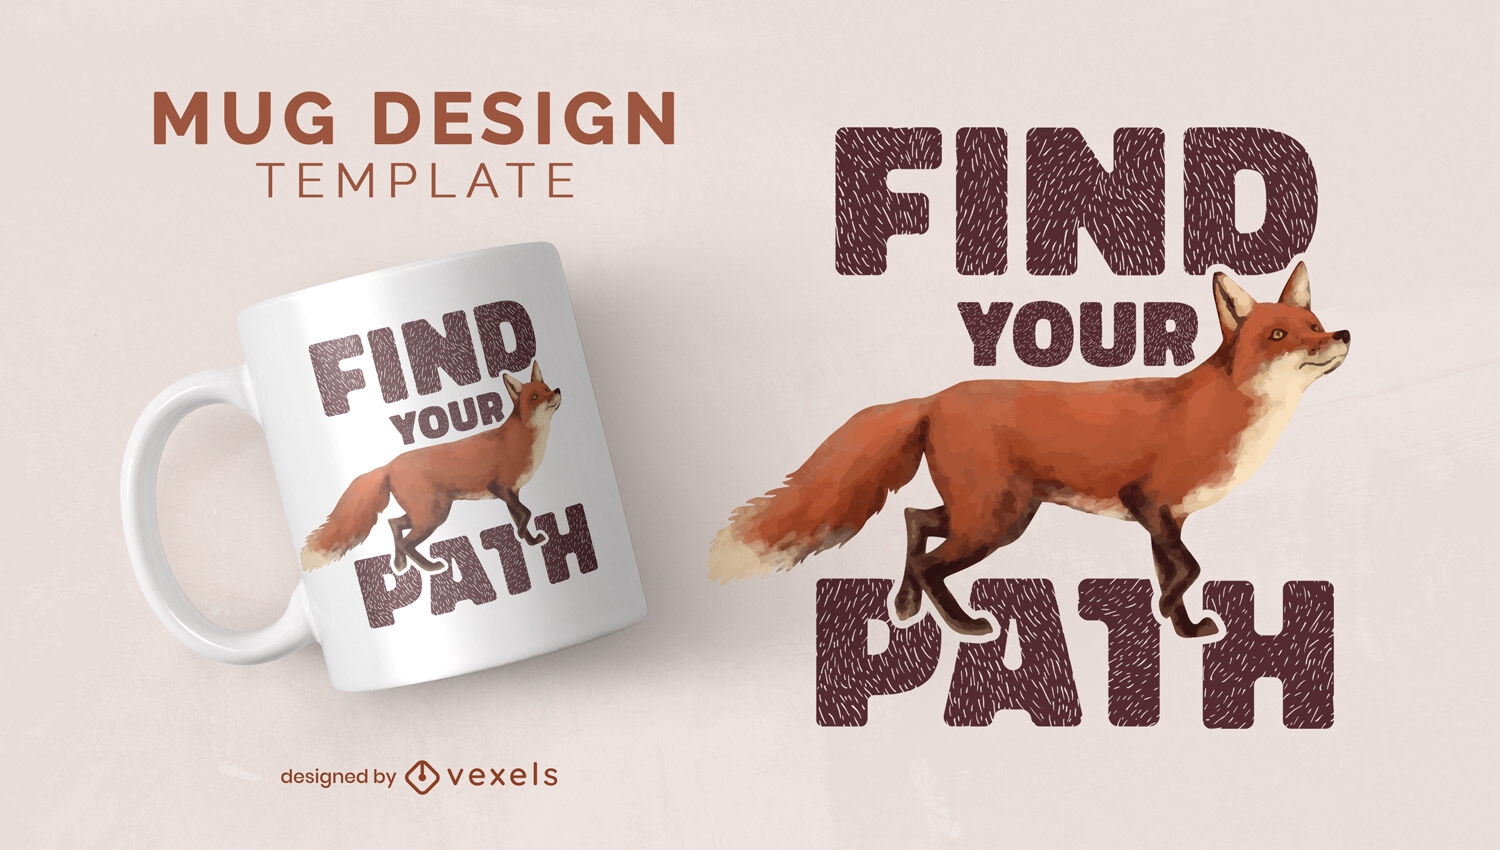 Find your path forest fox mug design